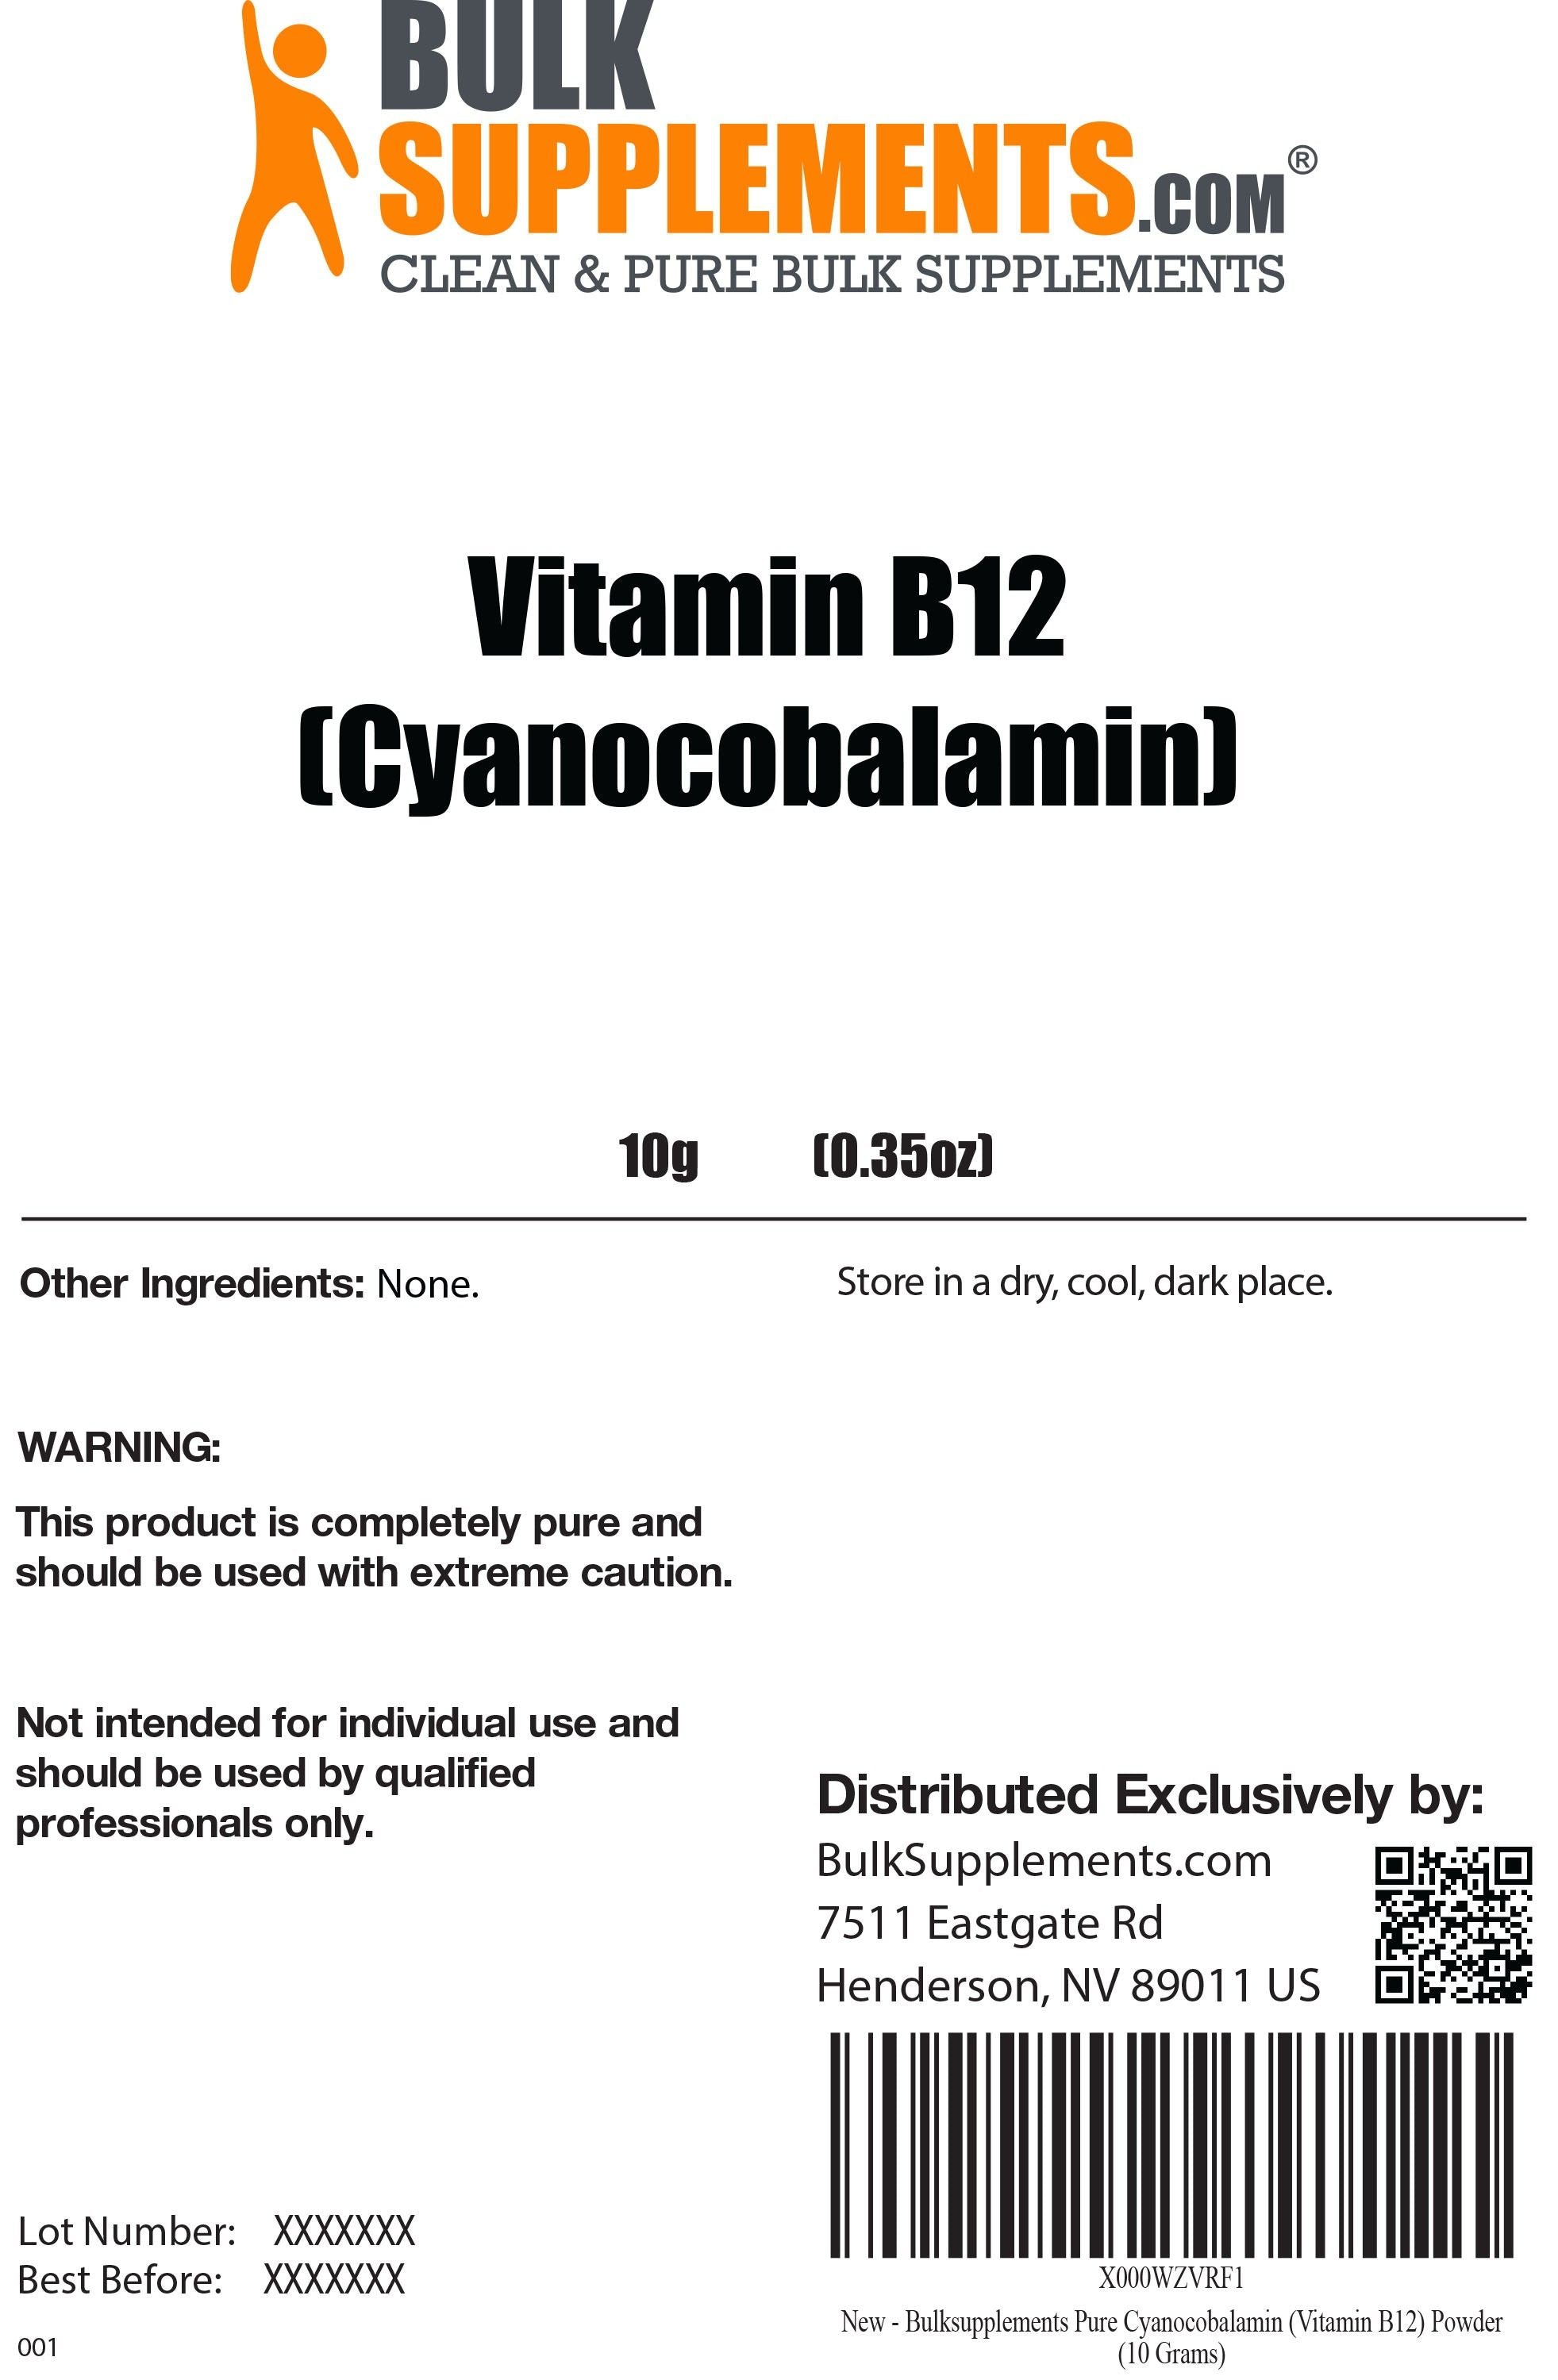 Vitamin B12 (Pure Cyanocobalamin) Powder label 10g